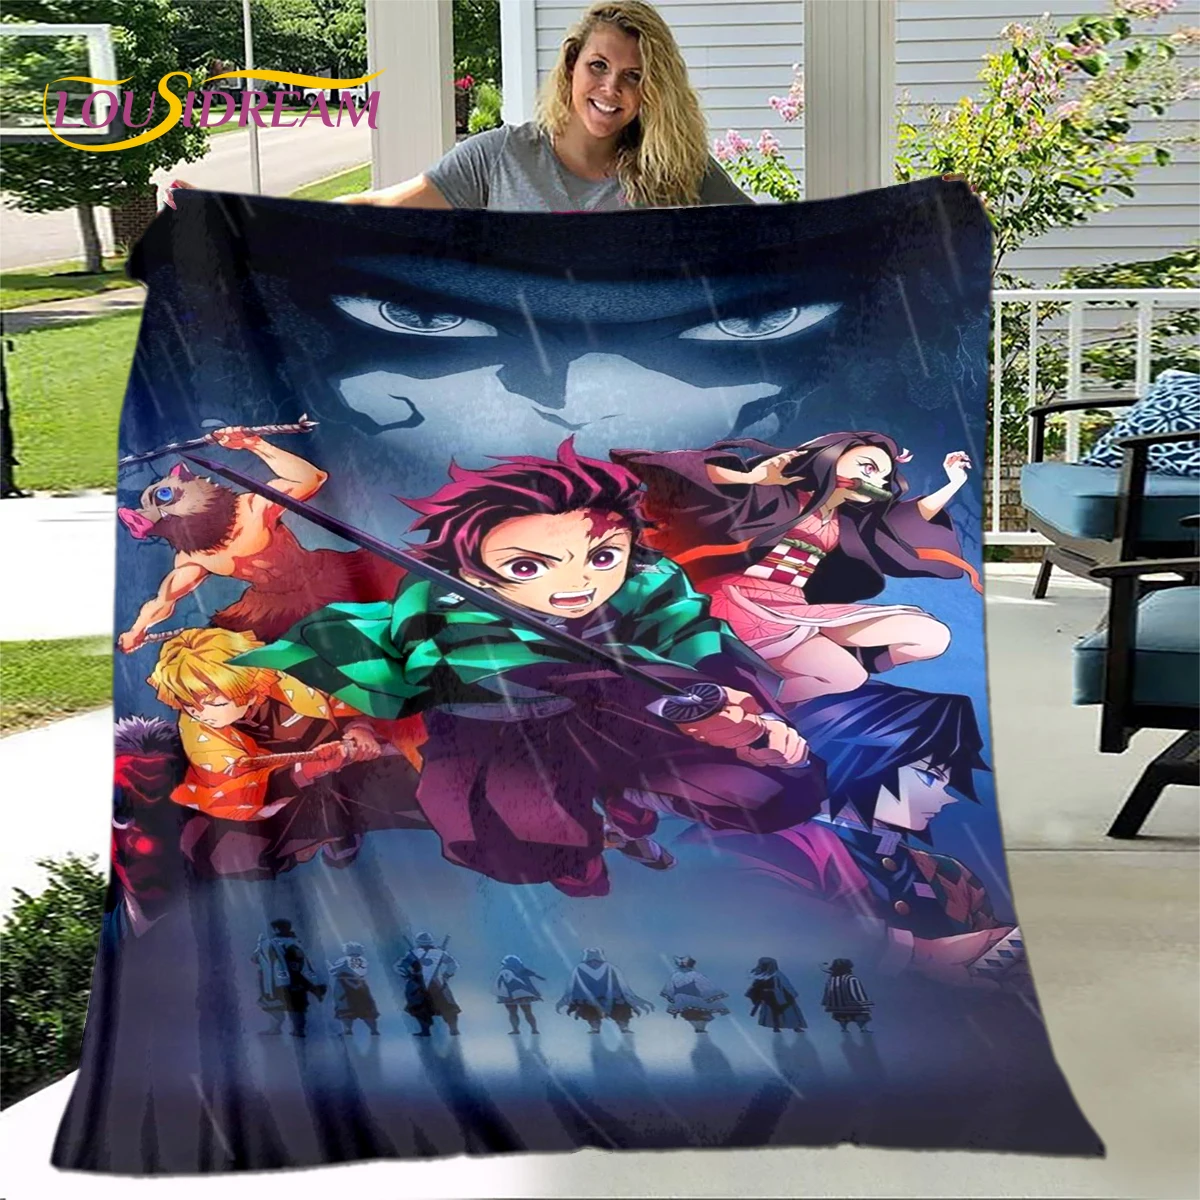 

Anime Cartoon Demon Slayer Blanket,Flannel Blanket Throw Blanket,Sherpa Warm Children's Blanket for Living Room Bedroom Beds